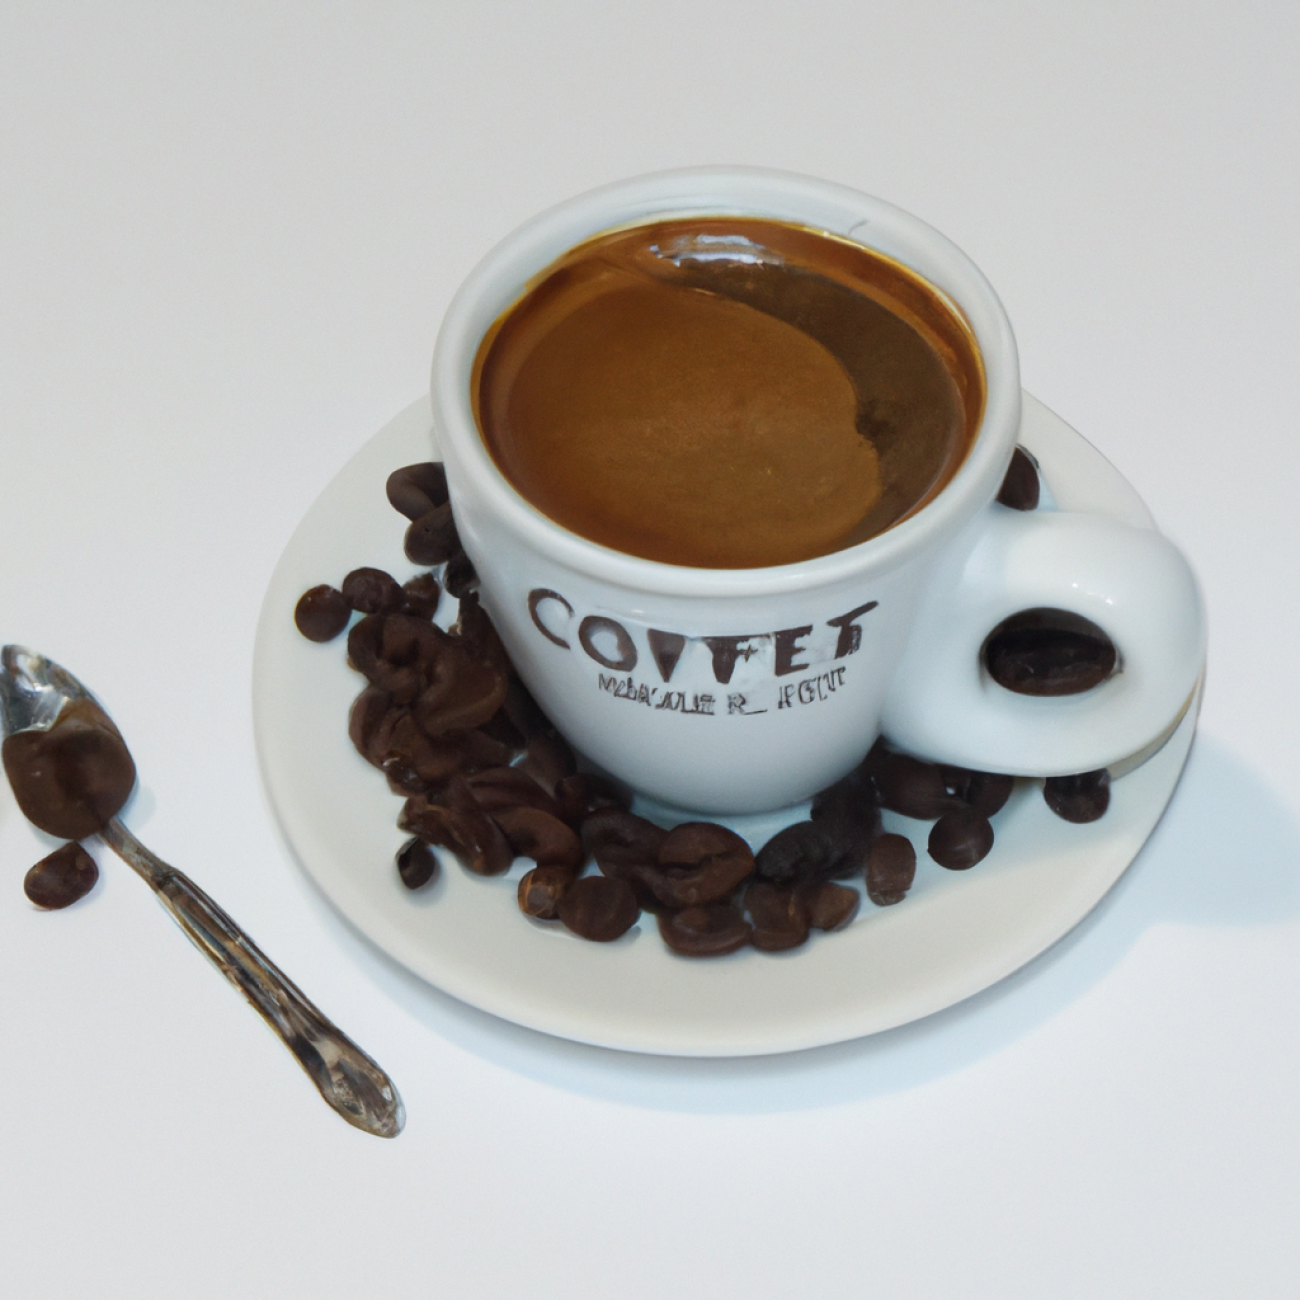 9. Eska Káva: Oblíbená pražírna kávy s autentickým⁣ pražským pocitem